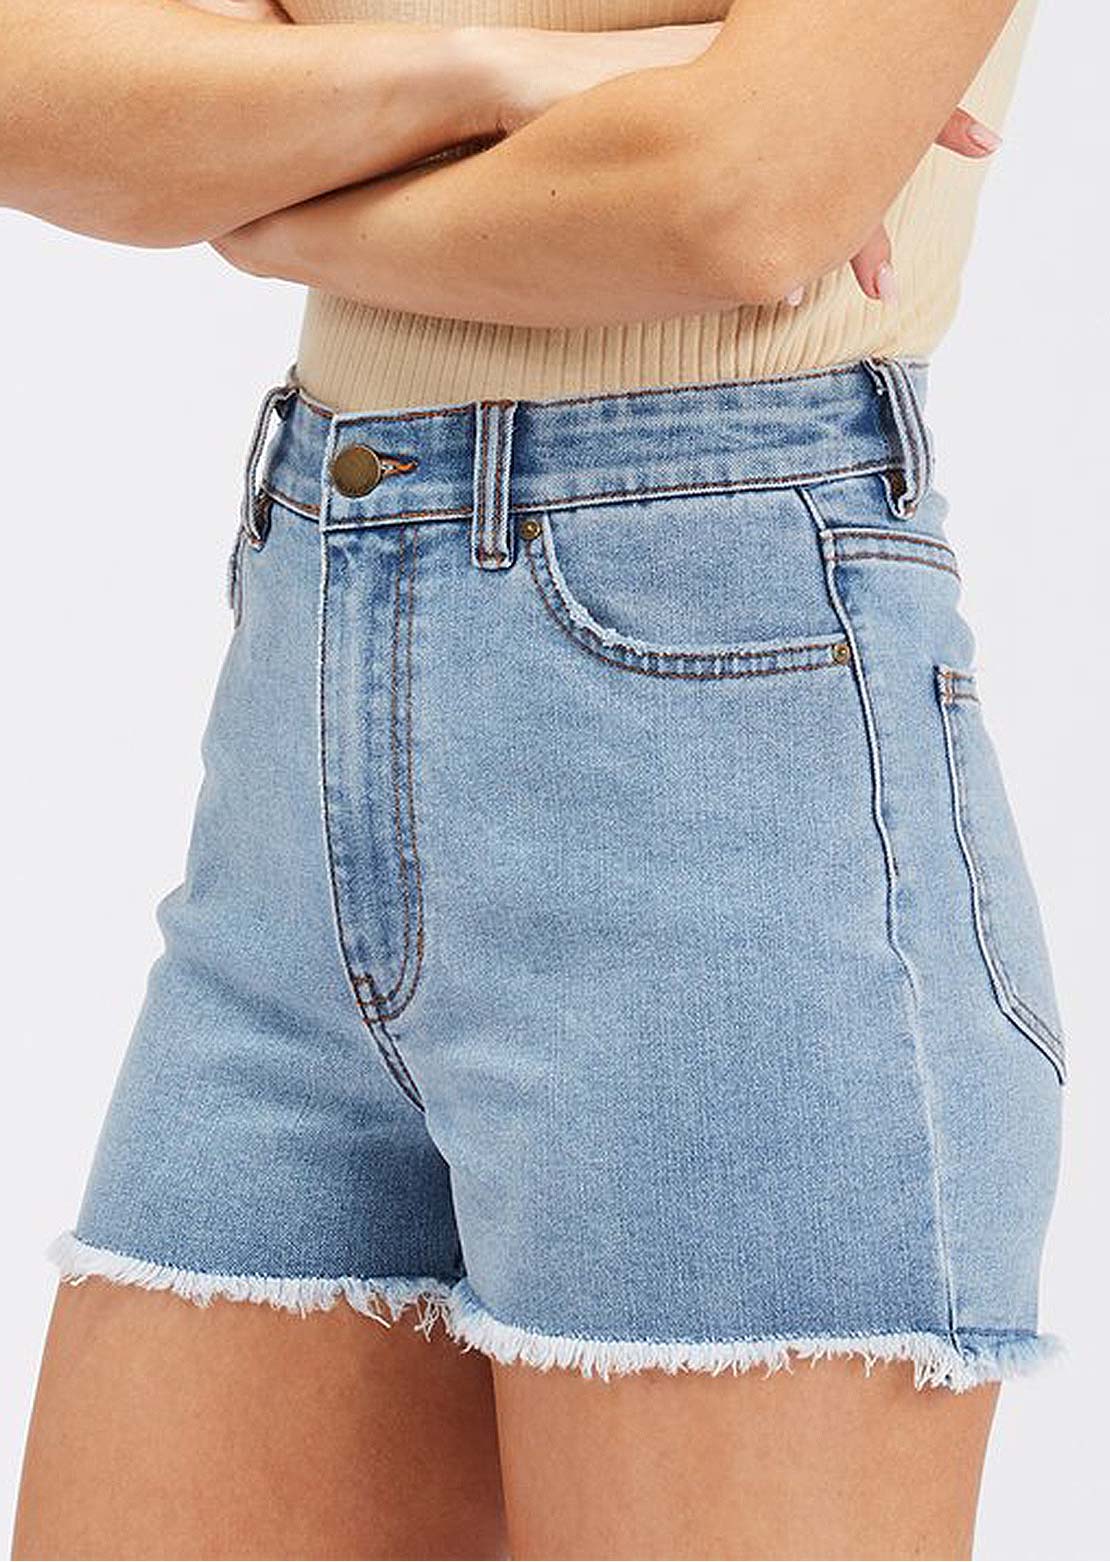 So Cheeky - Denim Shorts for Women